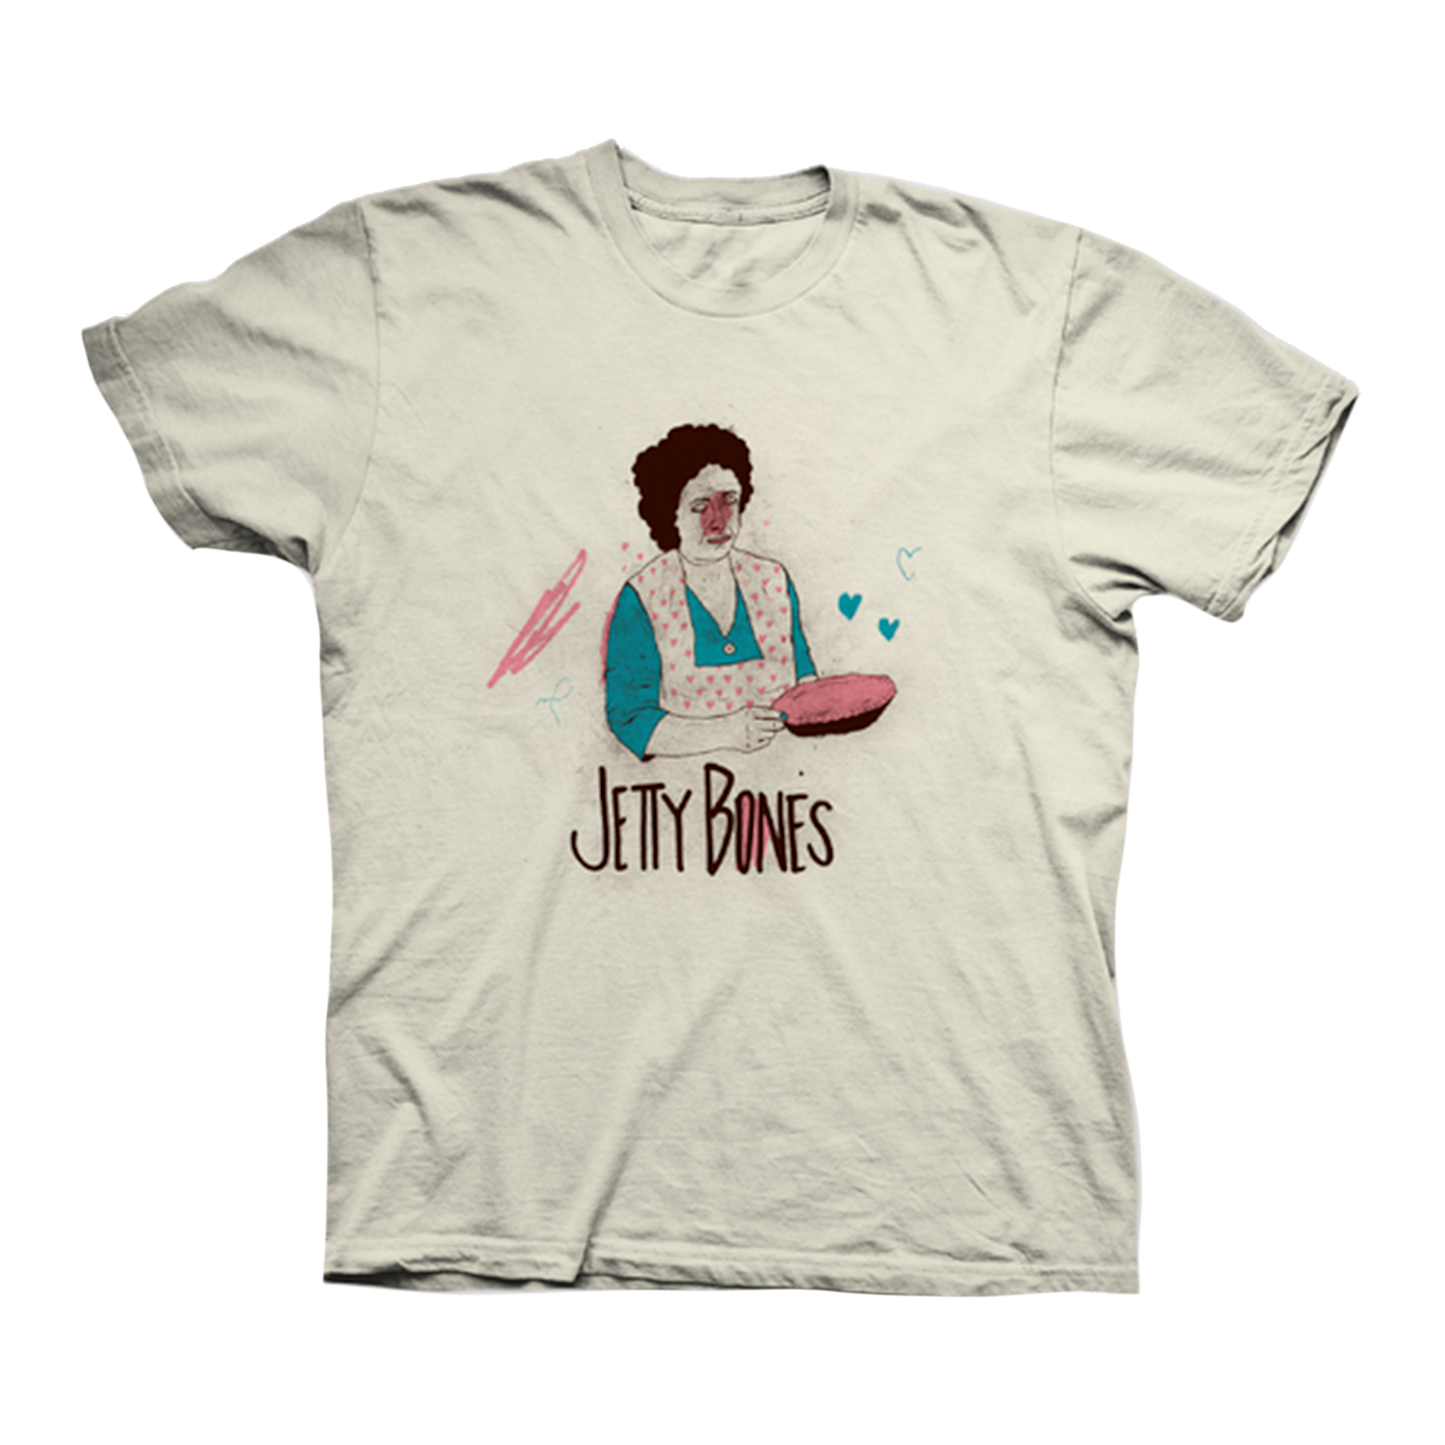 Jetty Bones - "Old Women" T-Shirt